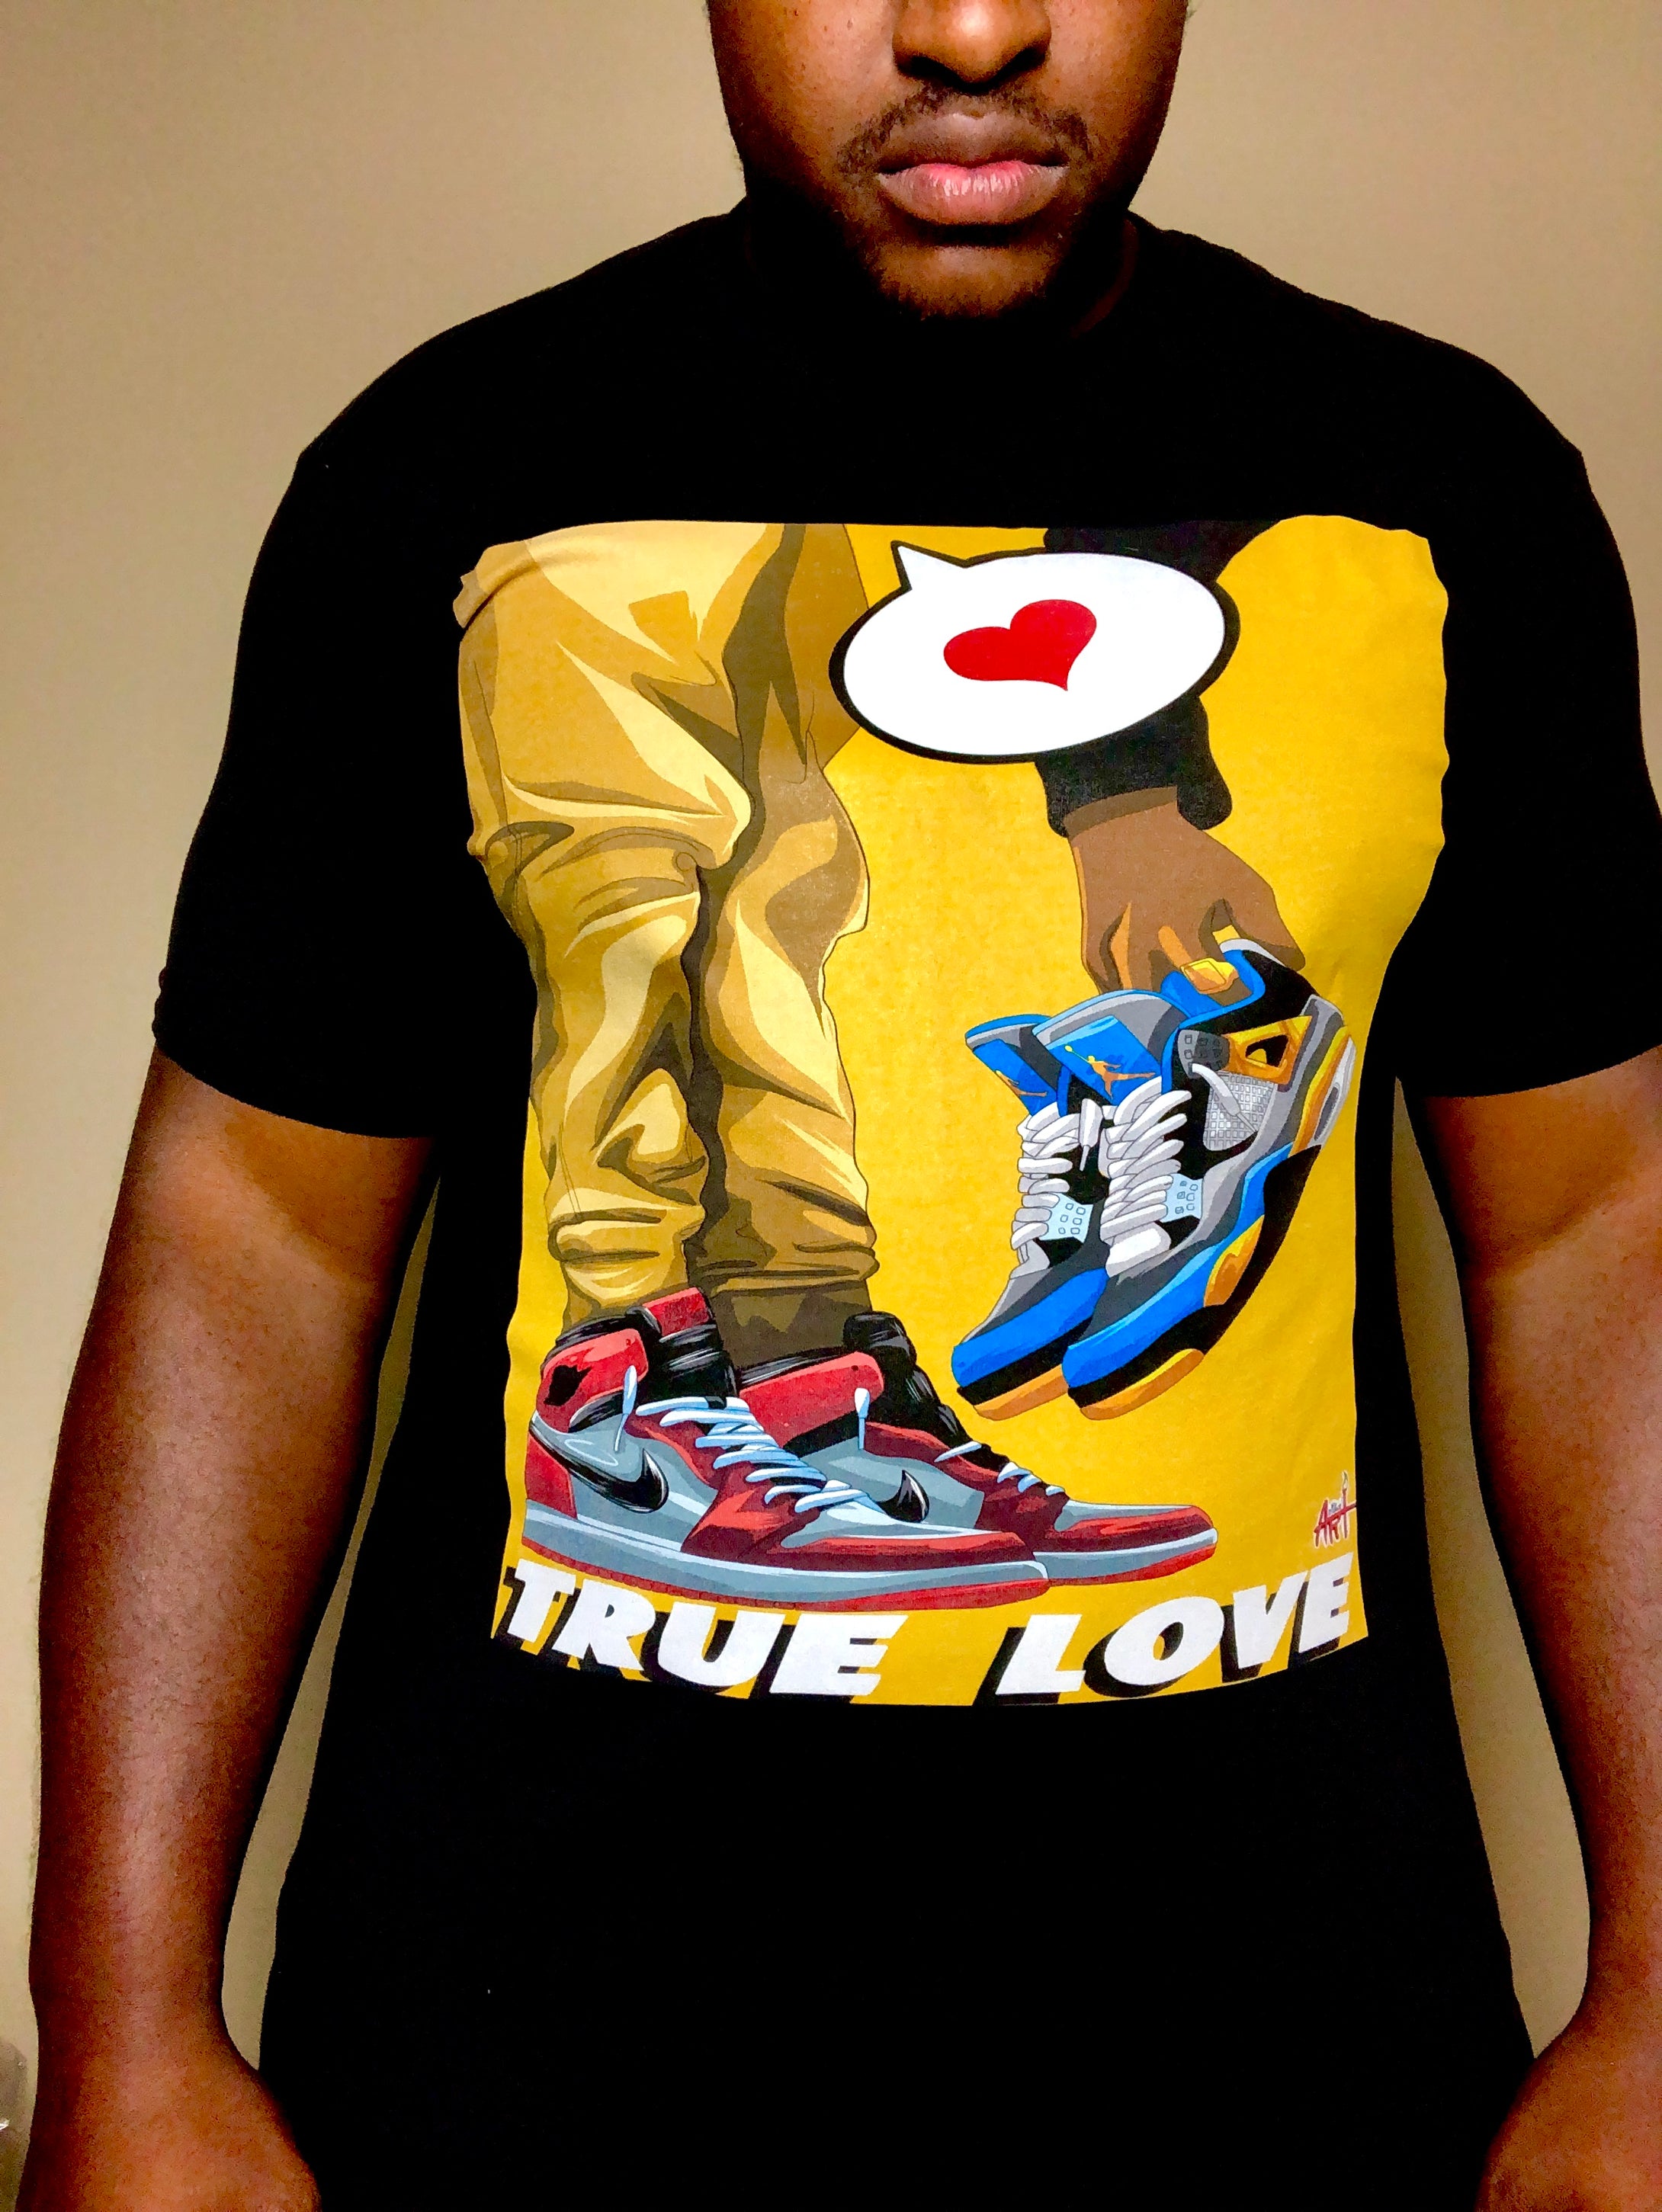 True Love Shirt DTG